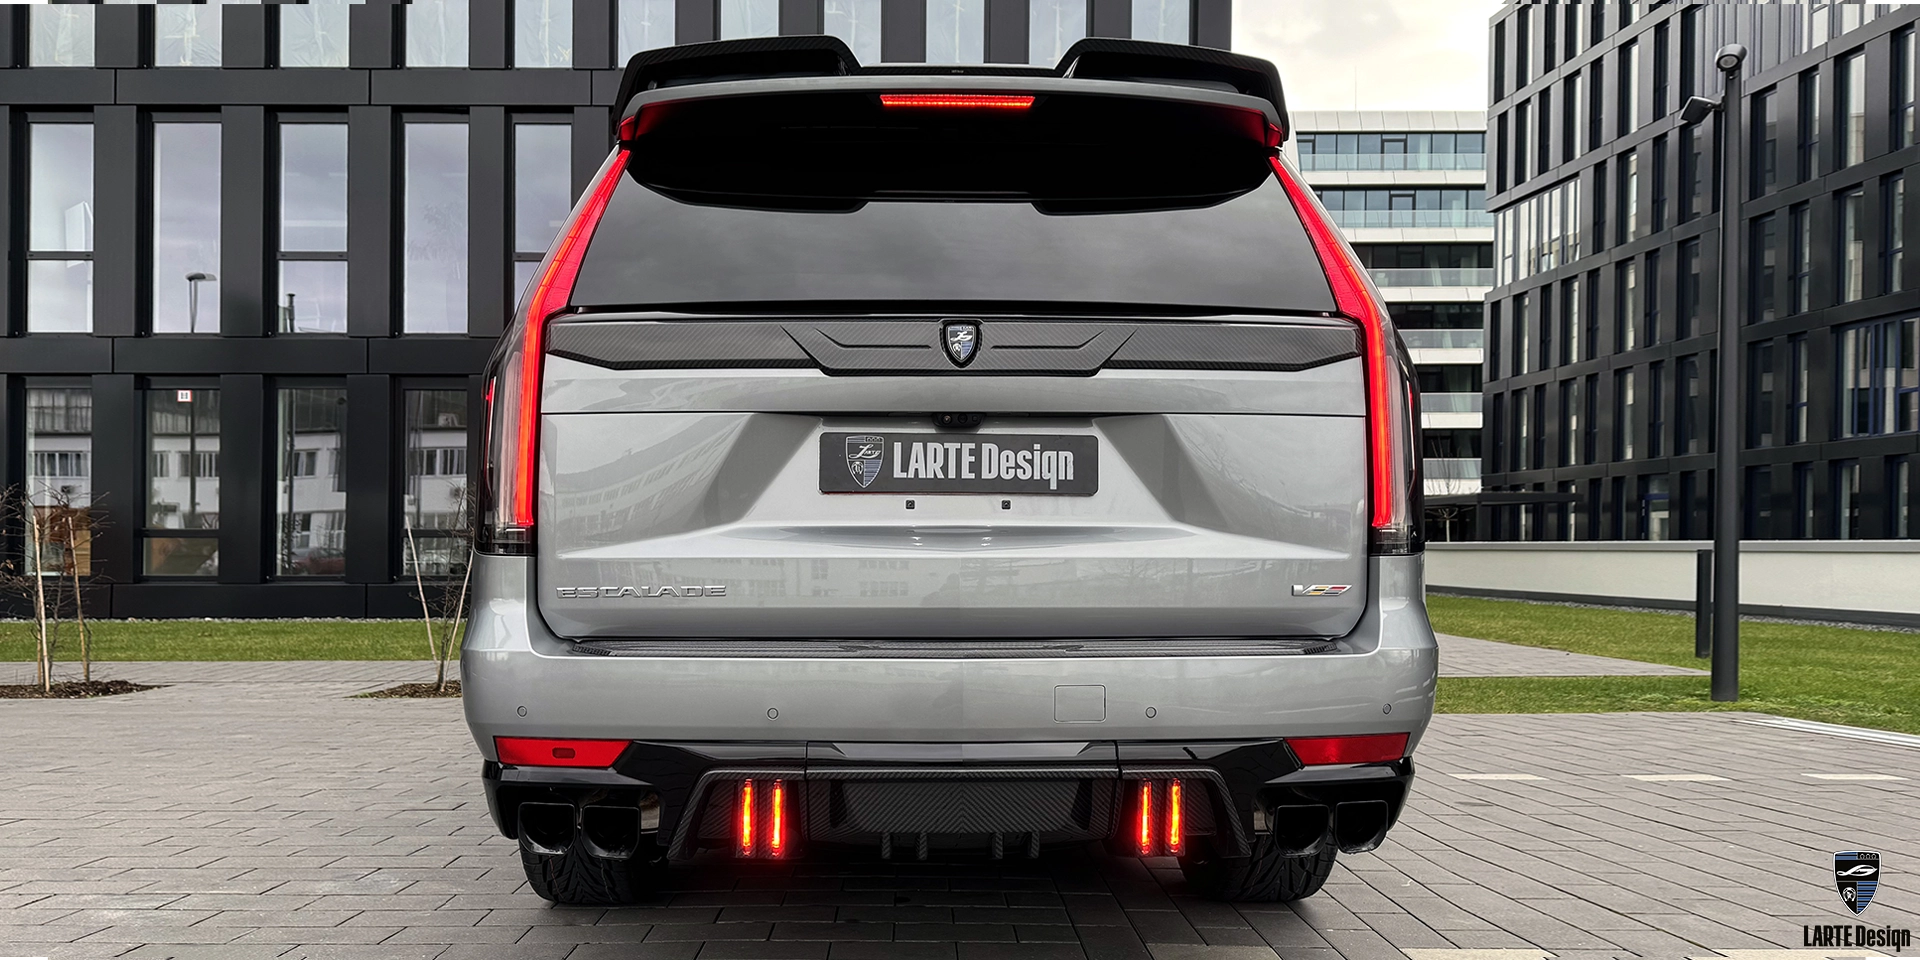 Carbon fiber rear diffuser with brake lights in Cadillac Escalade-V ESV body kit by LARTE Design